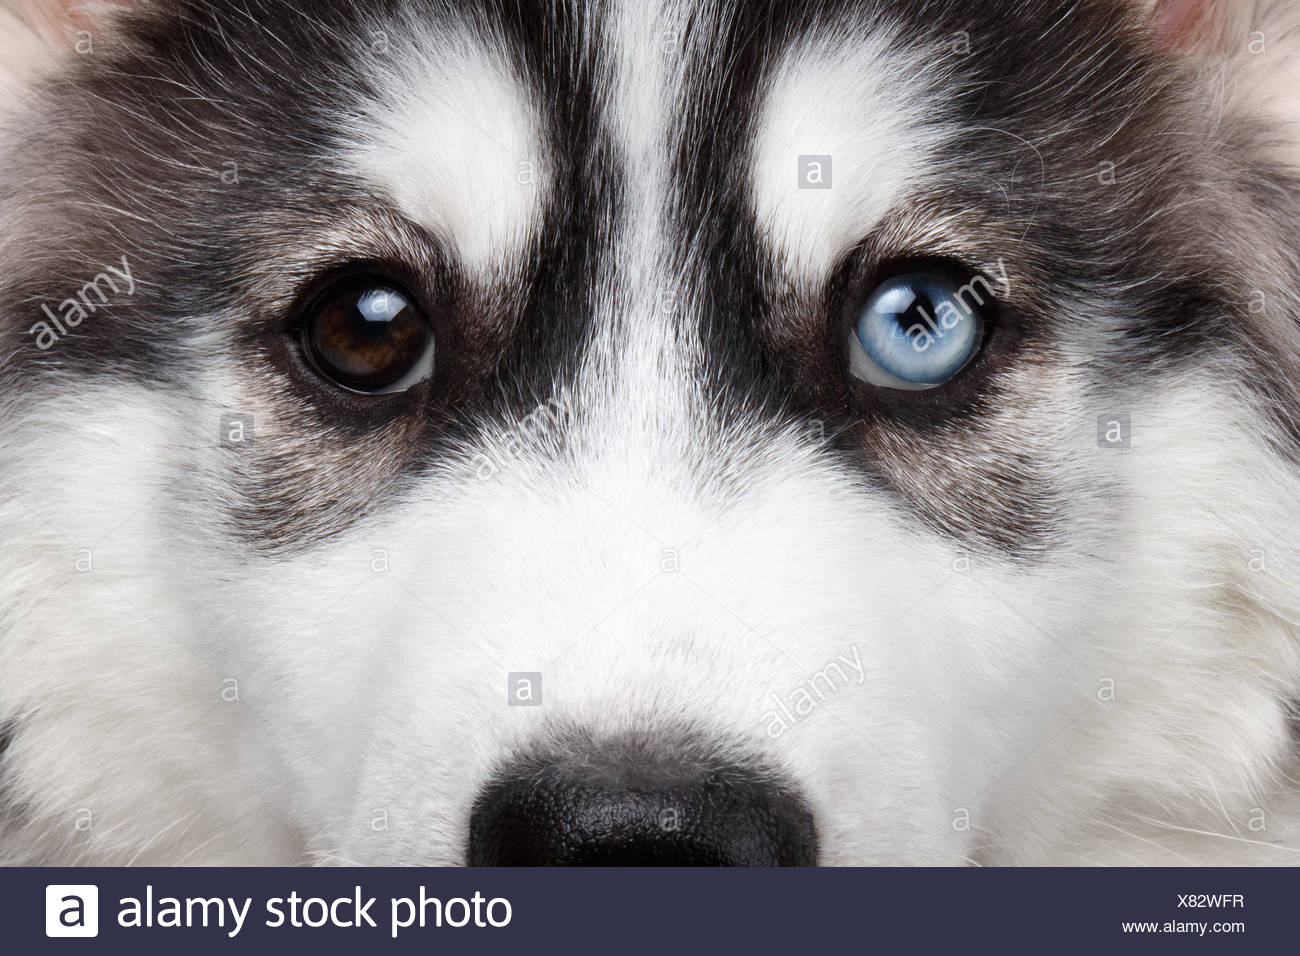 husky different eyes